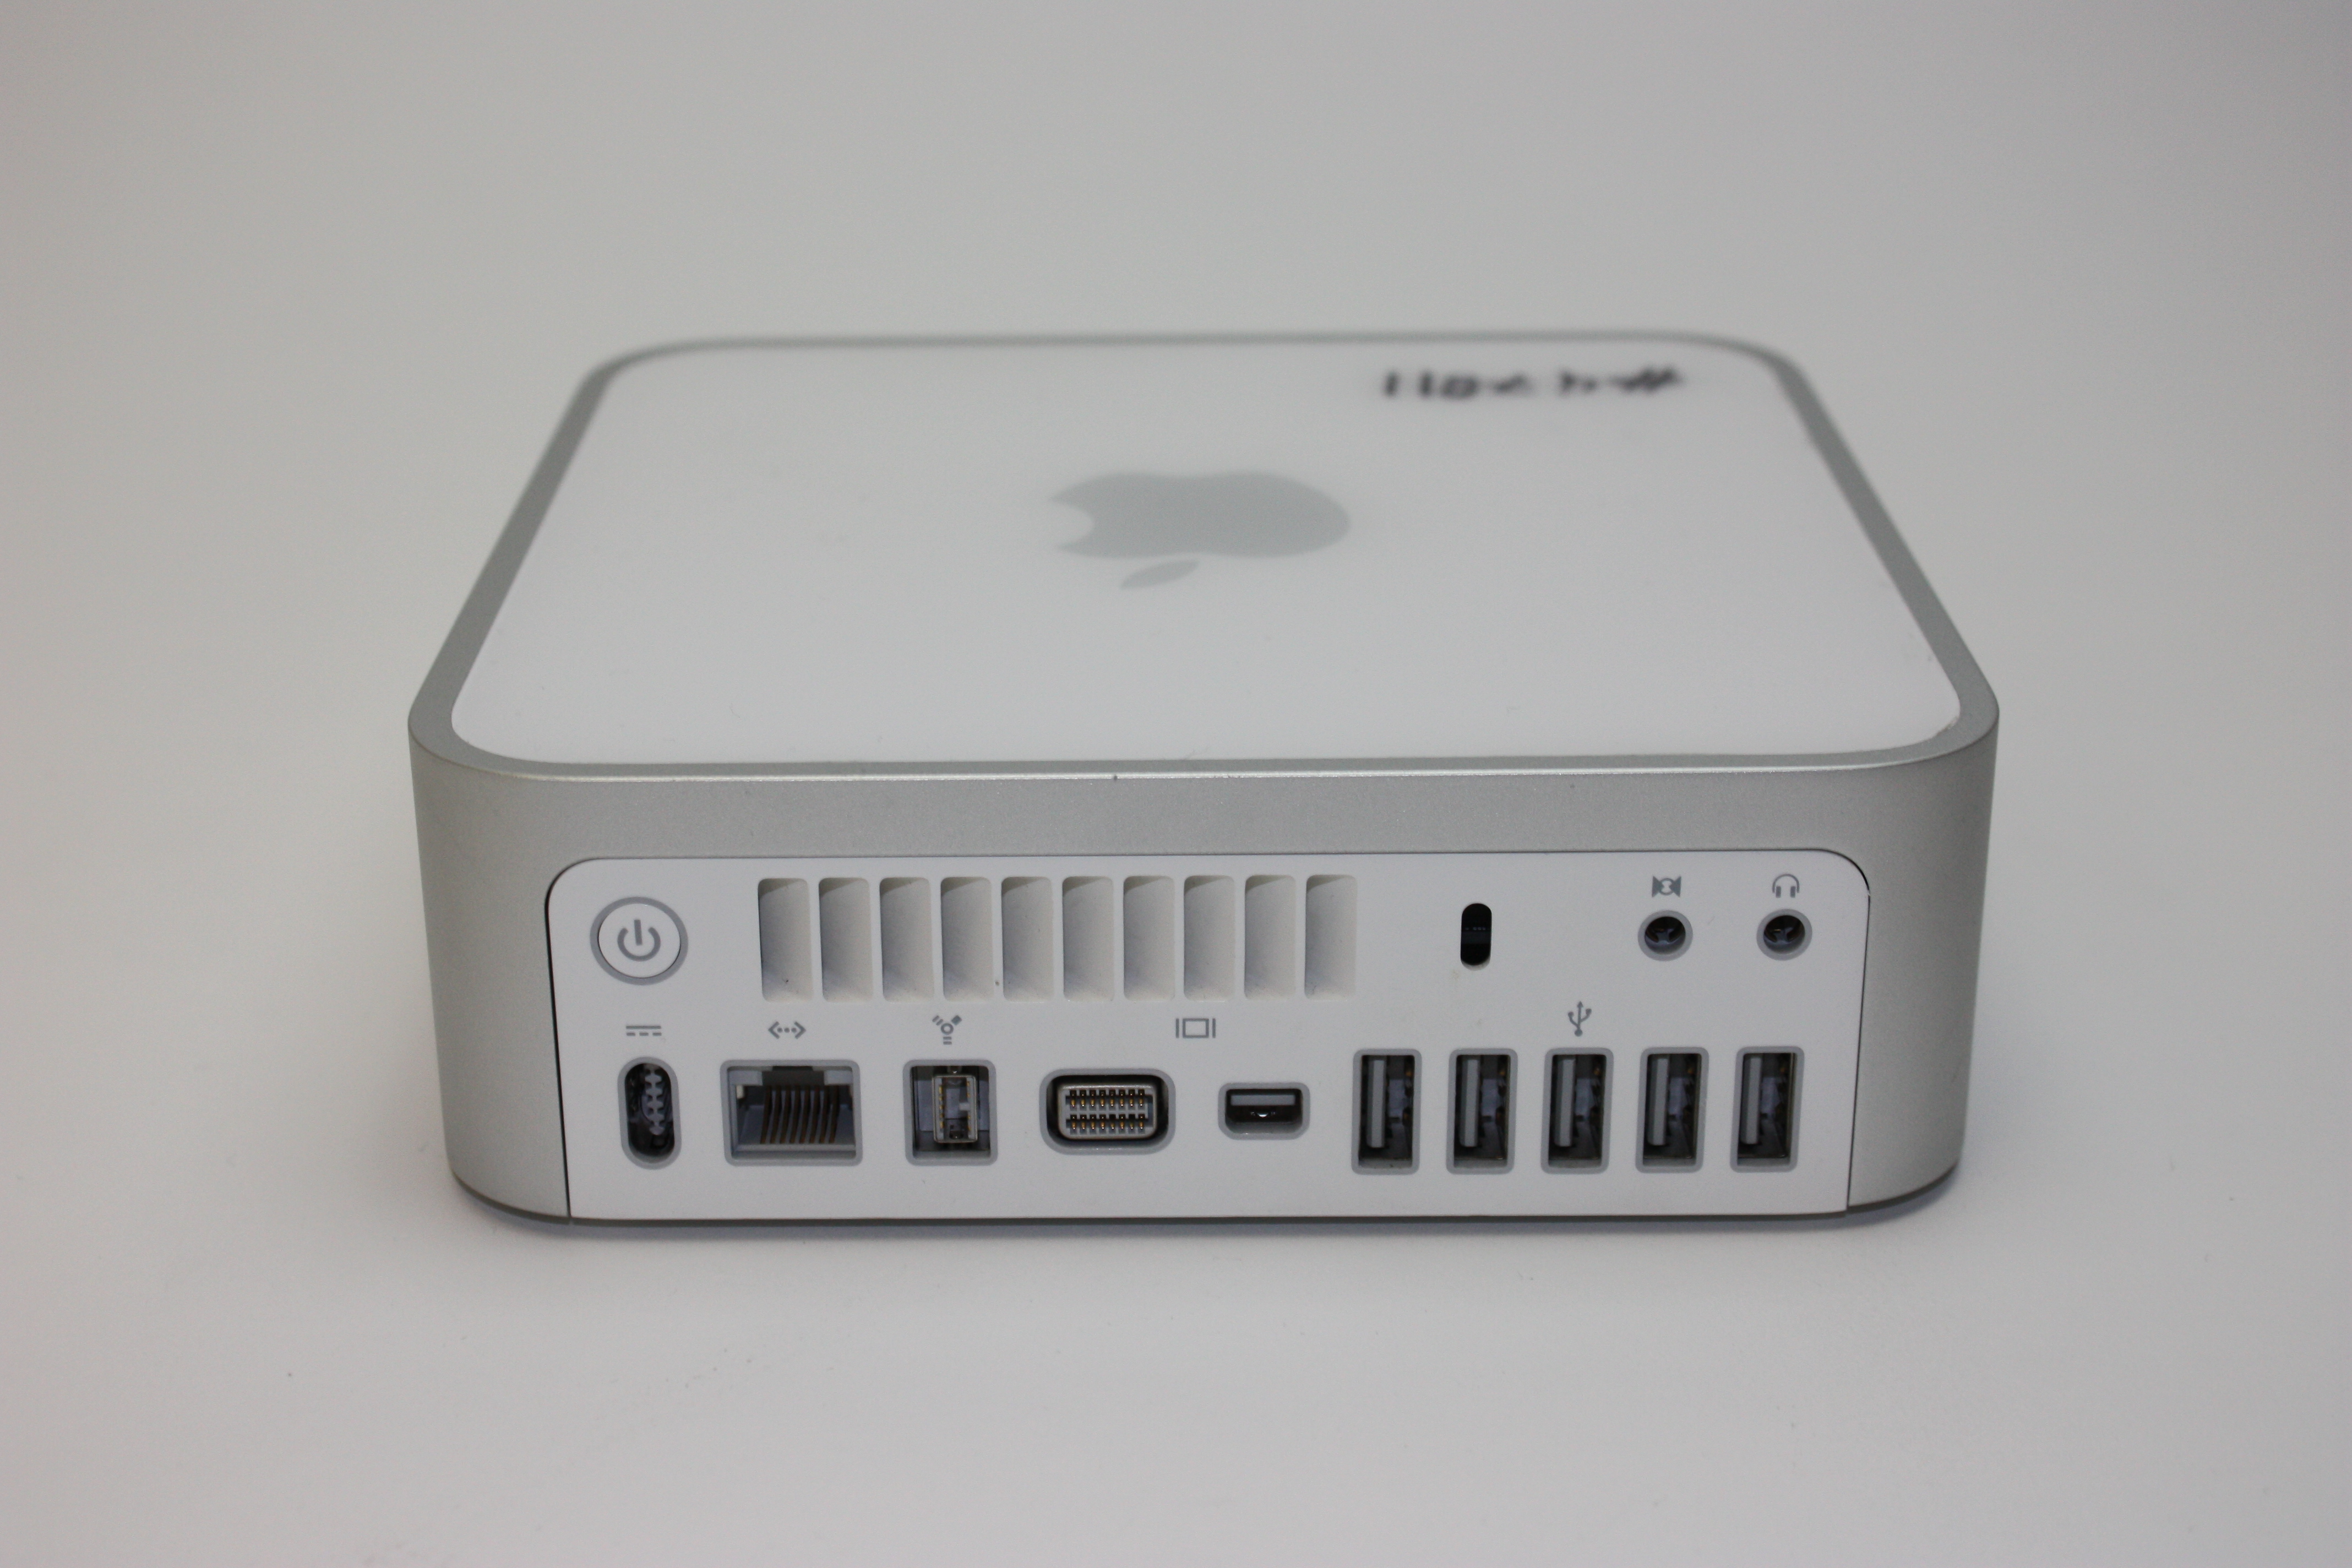 Mac Mini Server